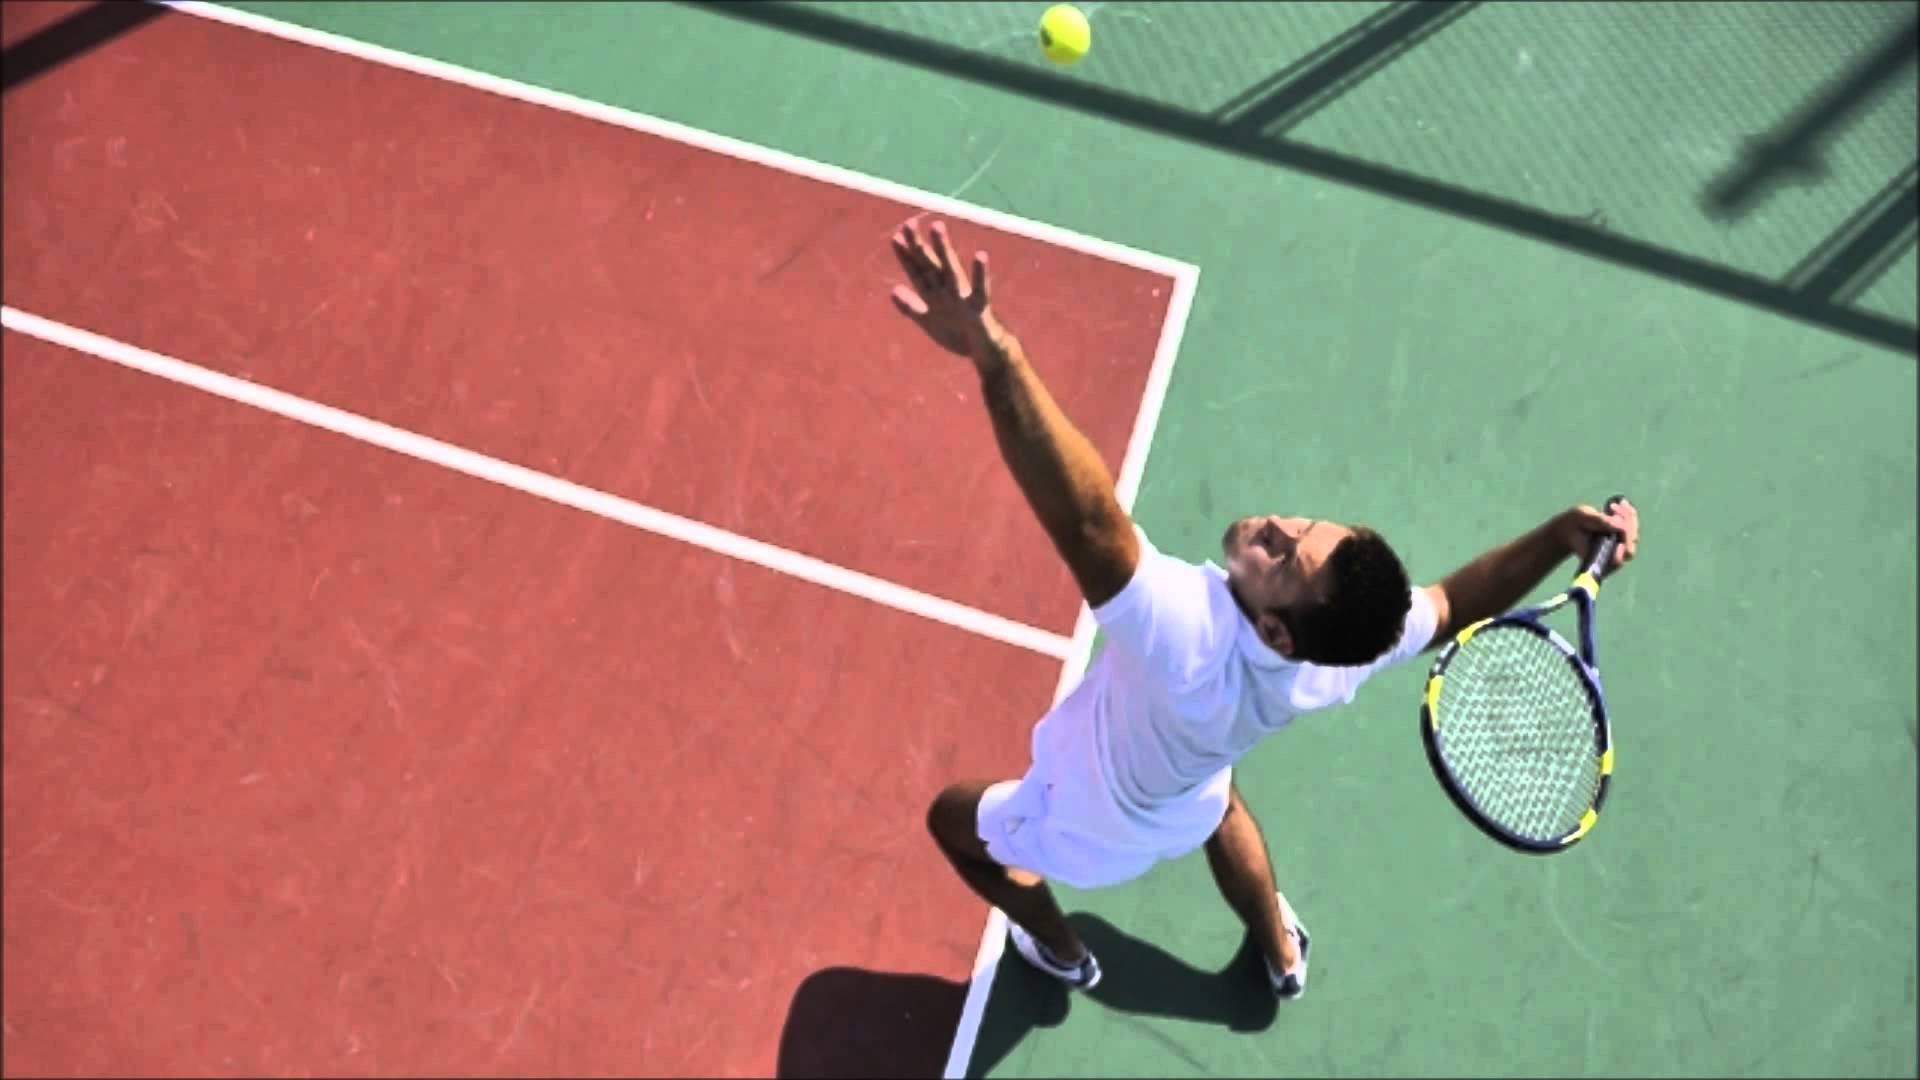 Overhand Tennis Serve Sound Effect - YouTube